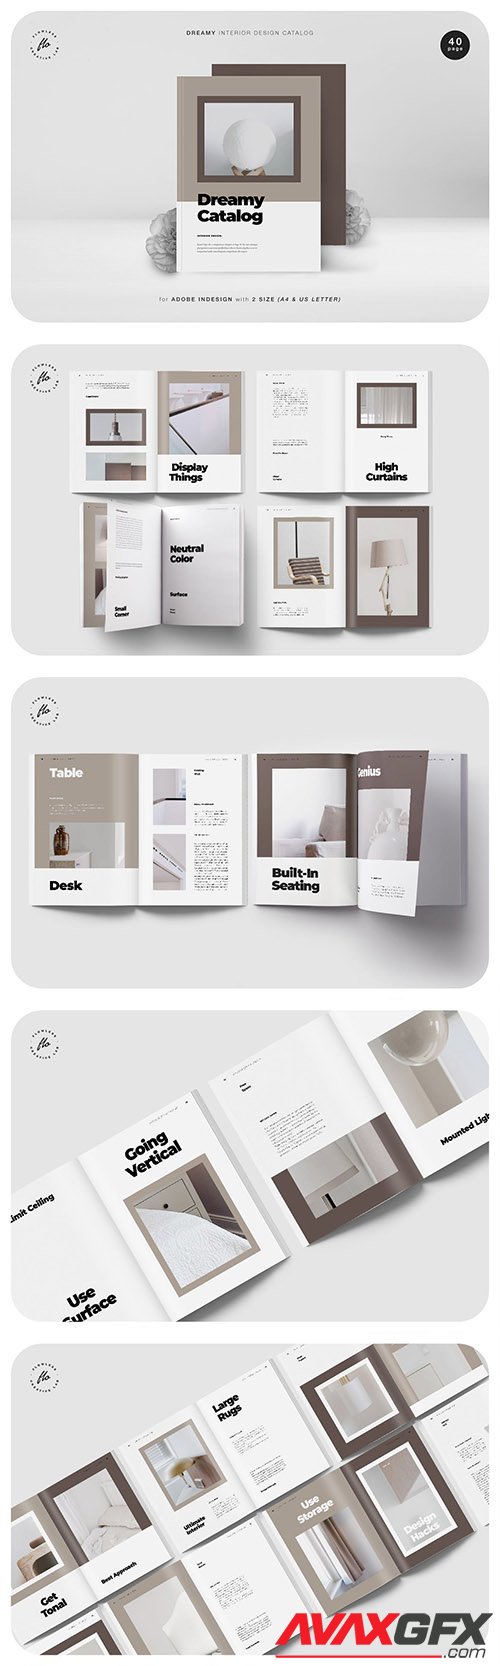 Dreamy Interor Design Catalog